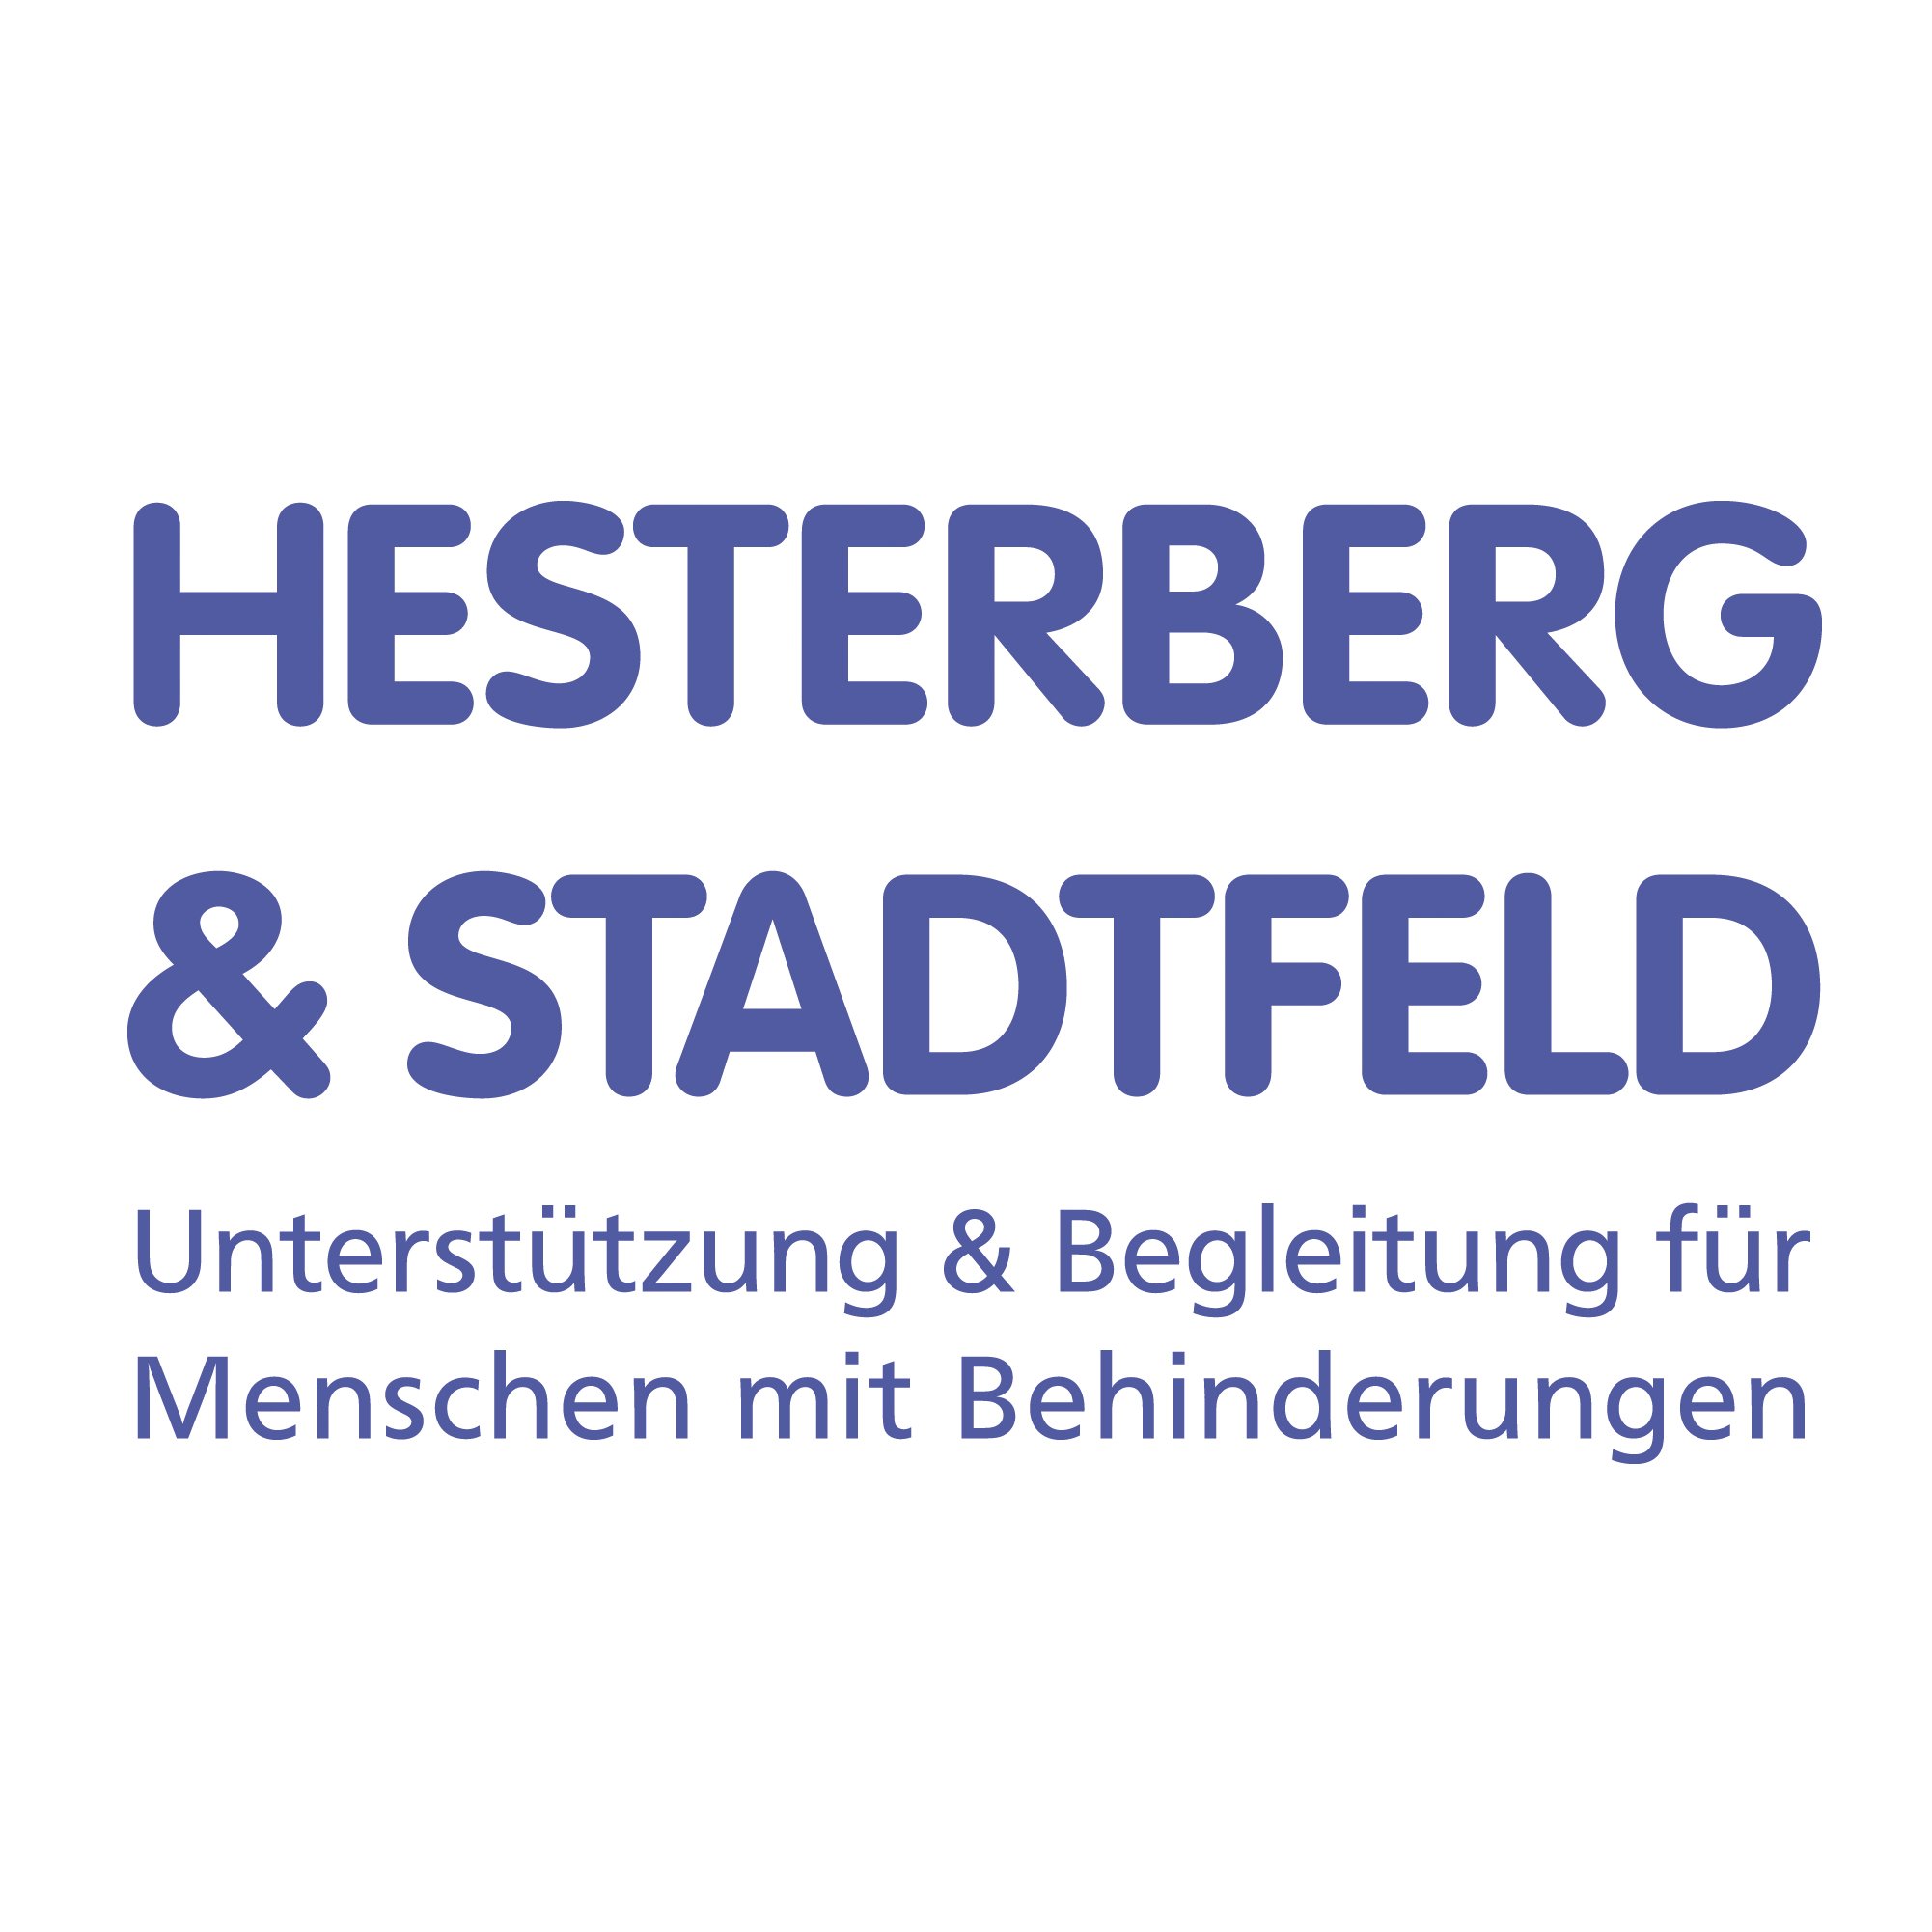 Logo von Suadicanistraße 34, Schleswig, Hesterberg & Stadtfeld gGmbH